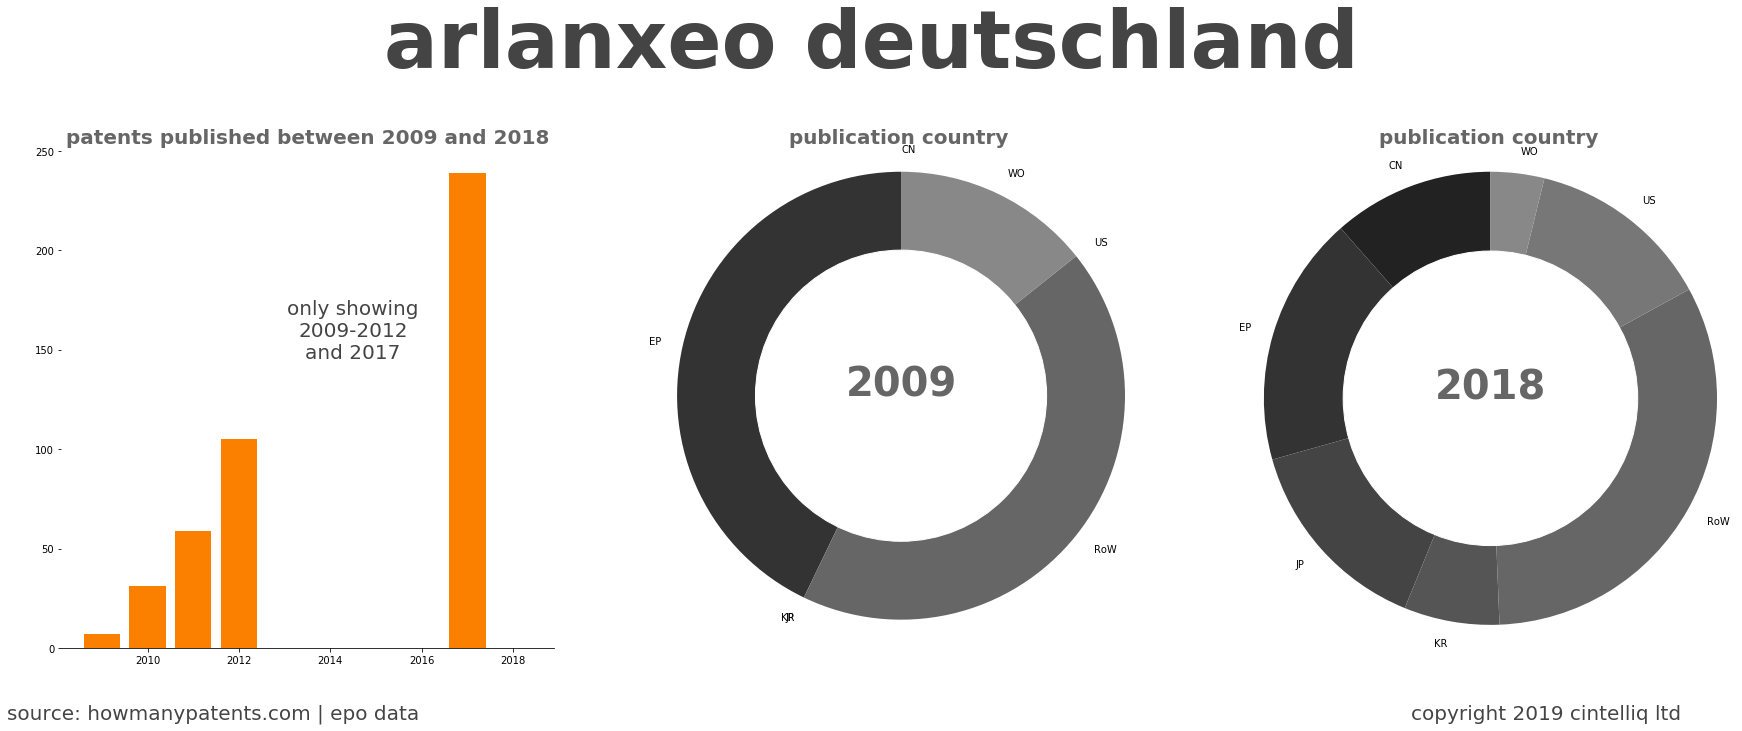 summary of patents for Arlanxeo Deutschland